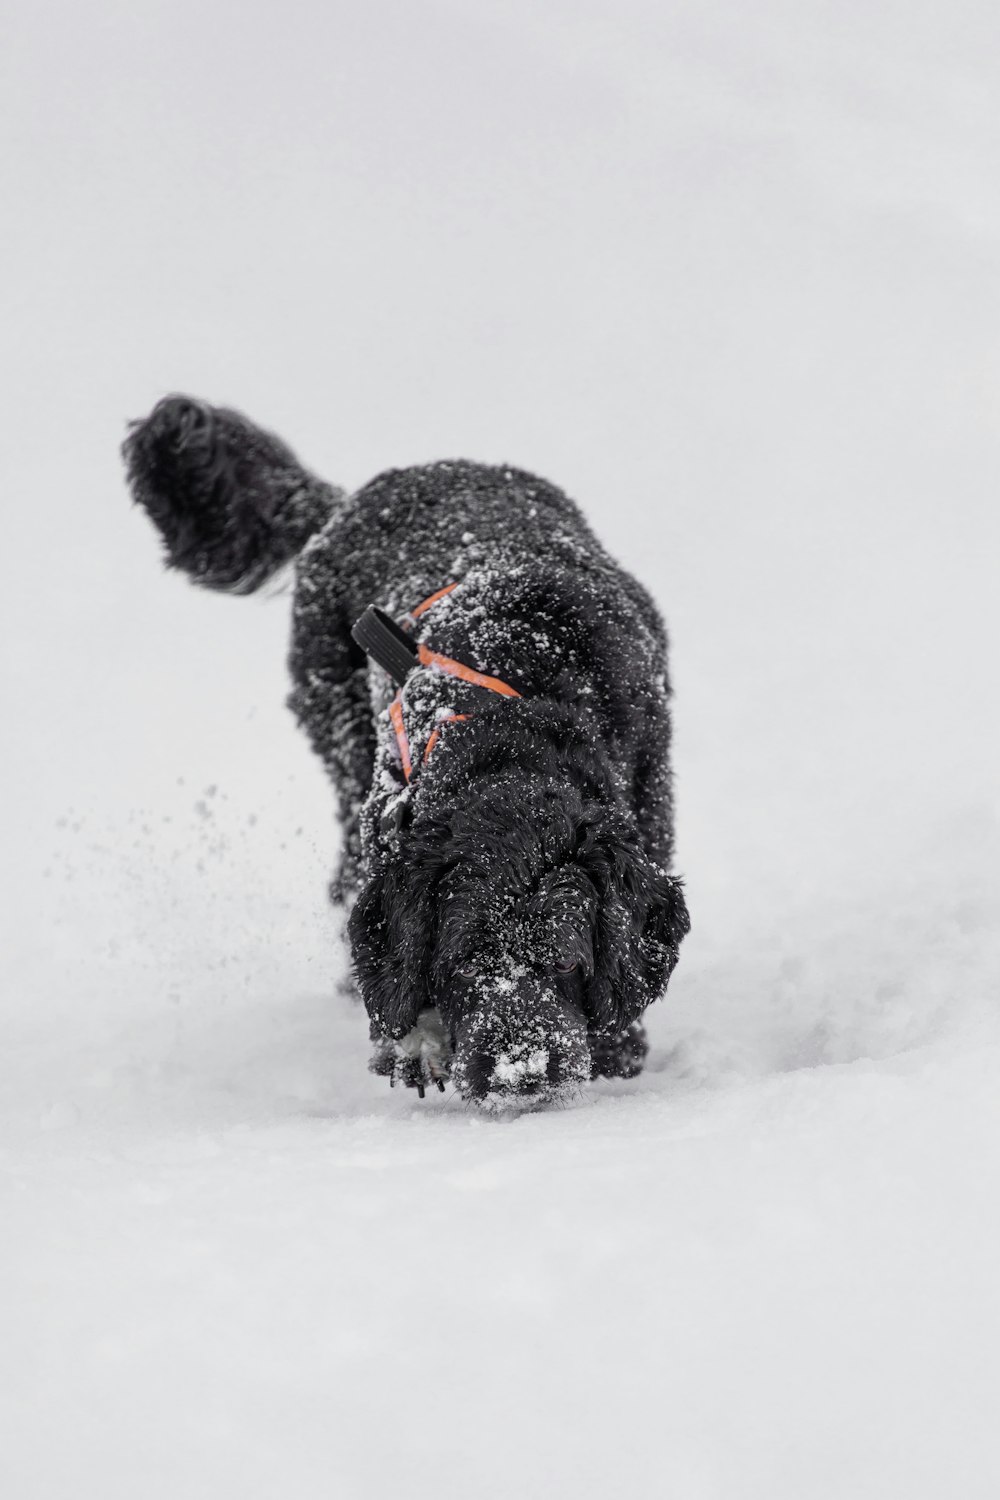 black long coat large dog on snow covered ground